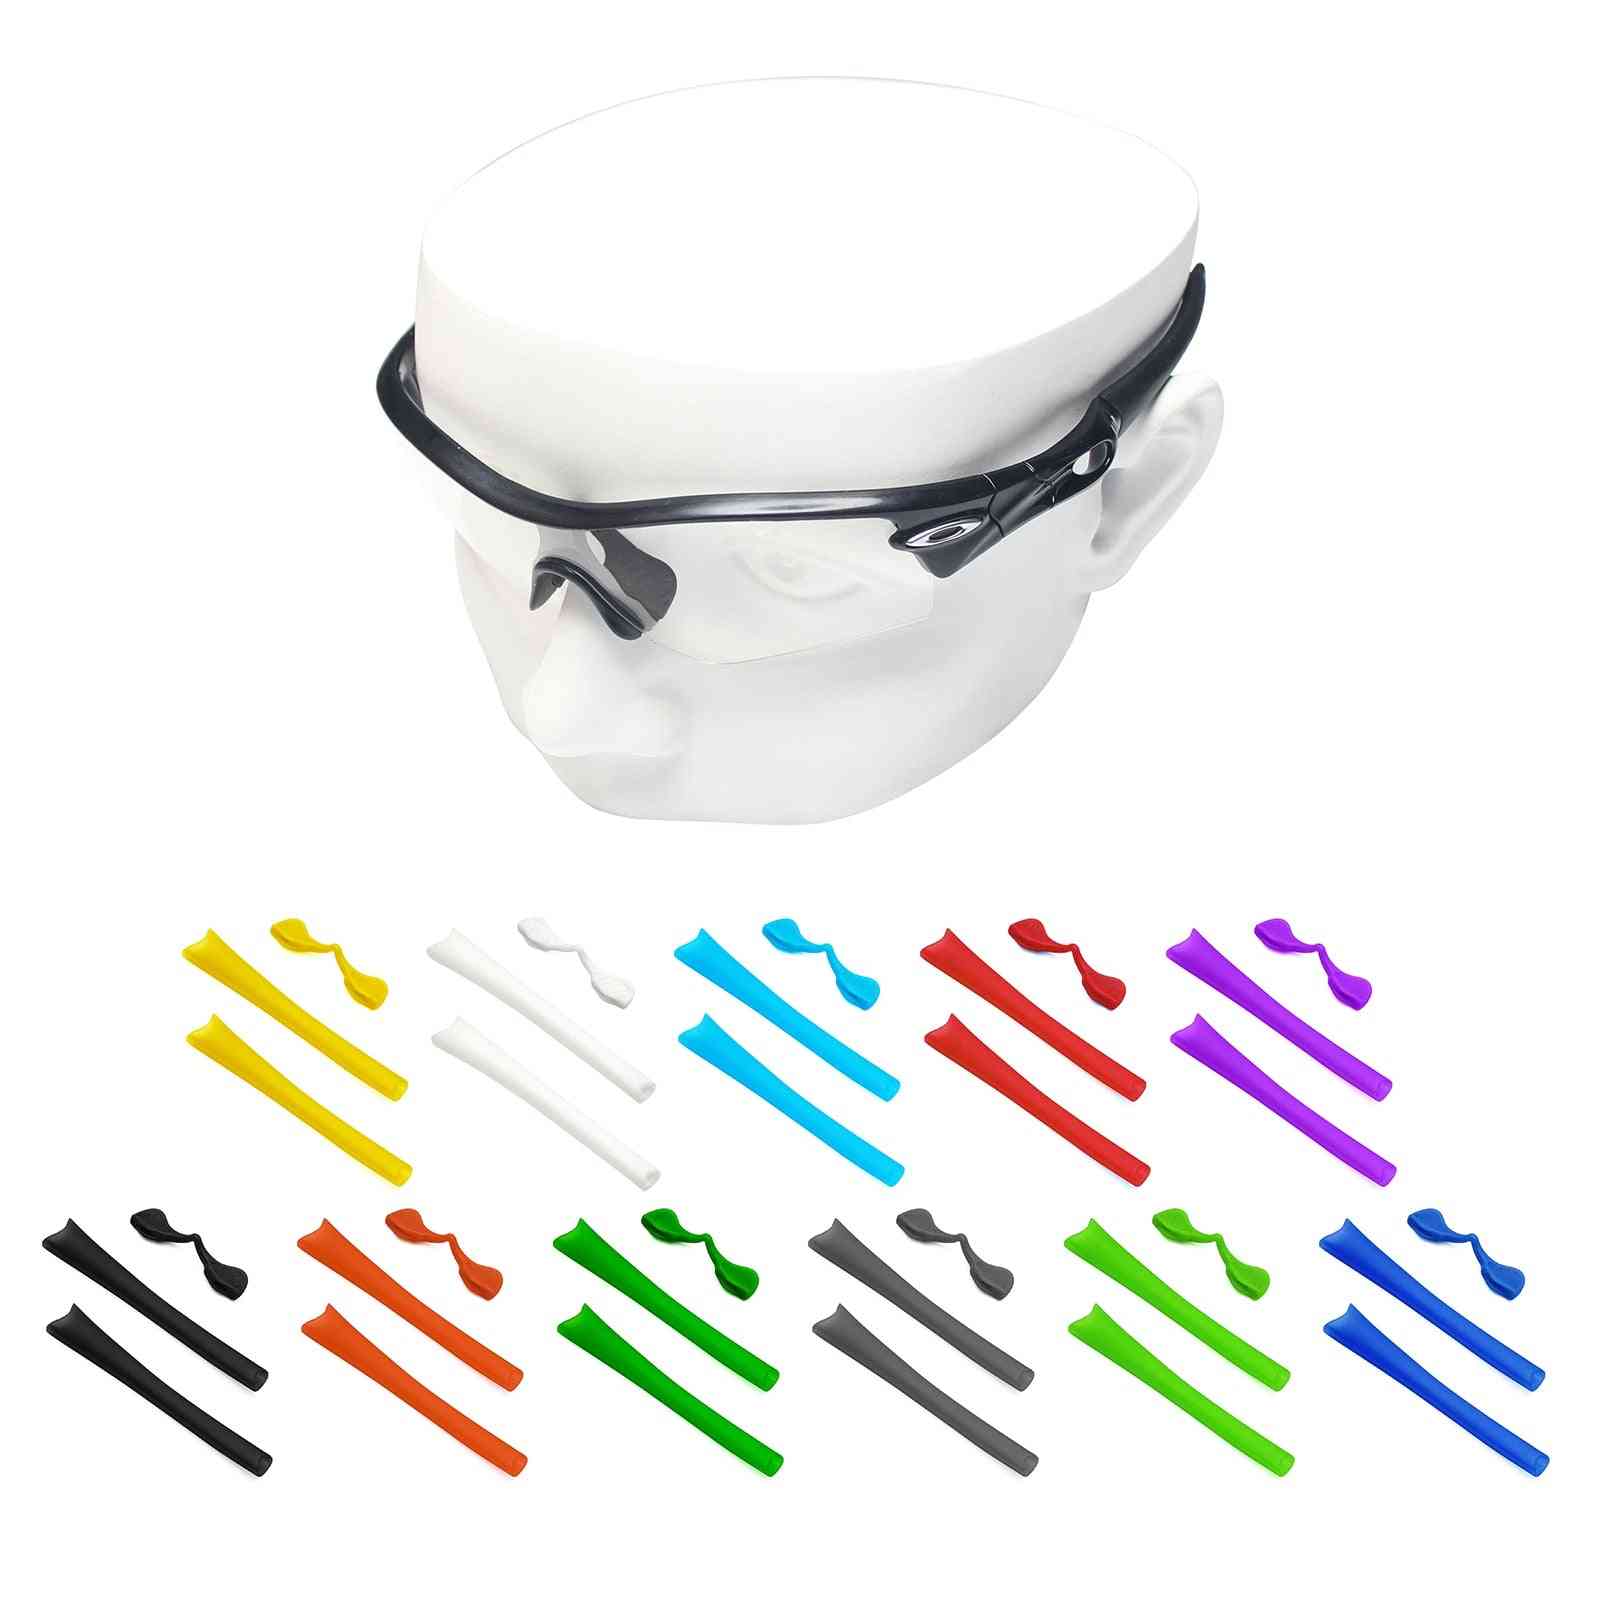 Rubber Kits Nose Pads & Earsocks, Radar Path Sunglasses